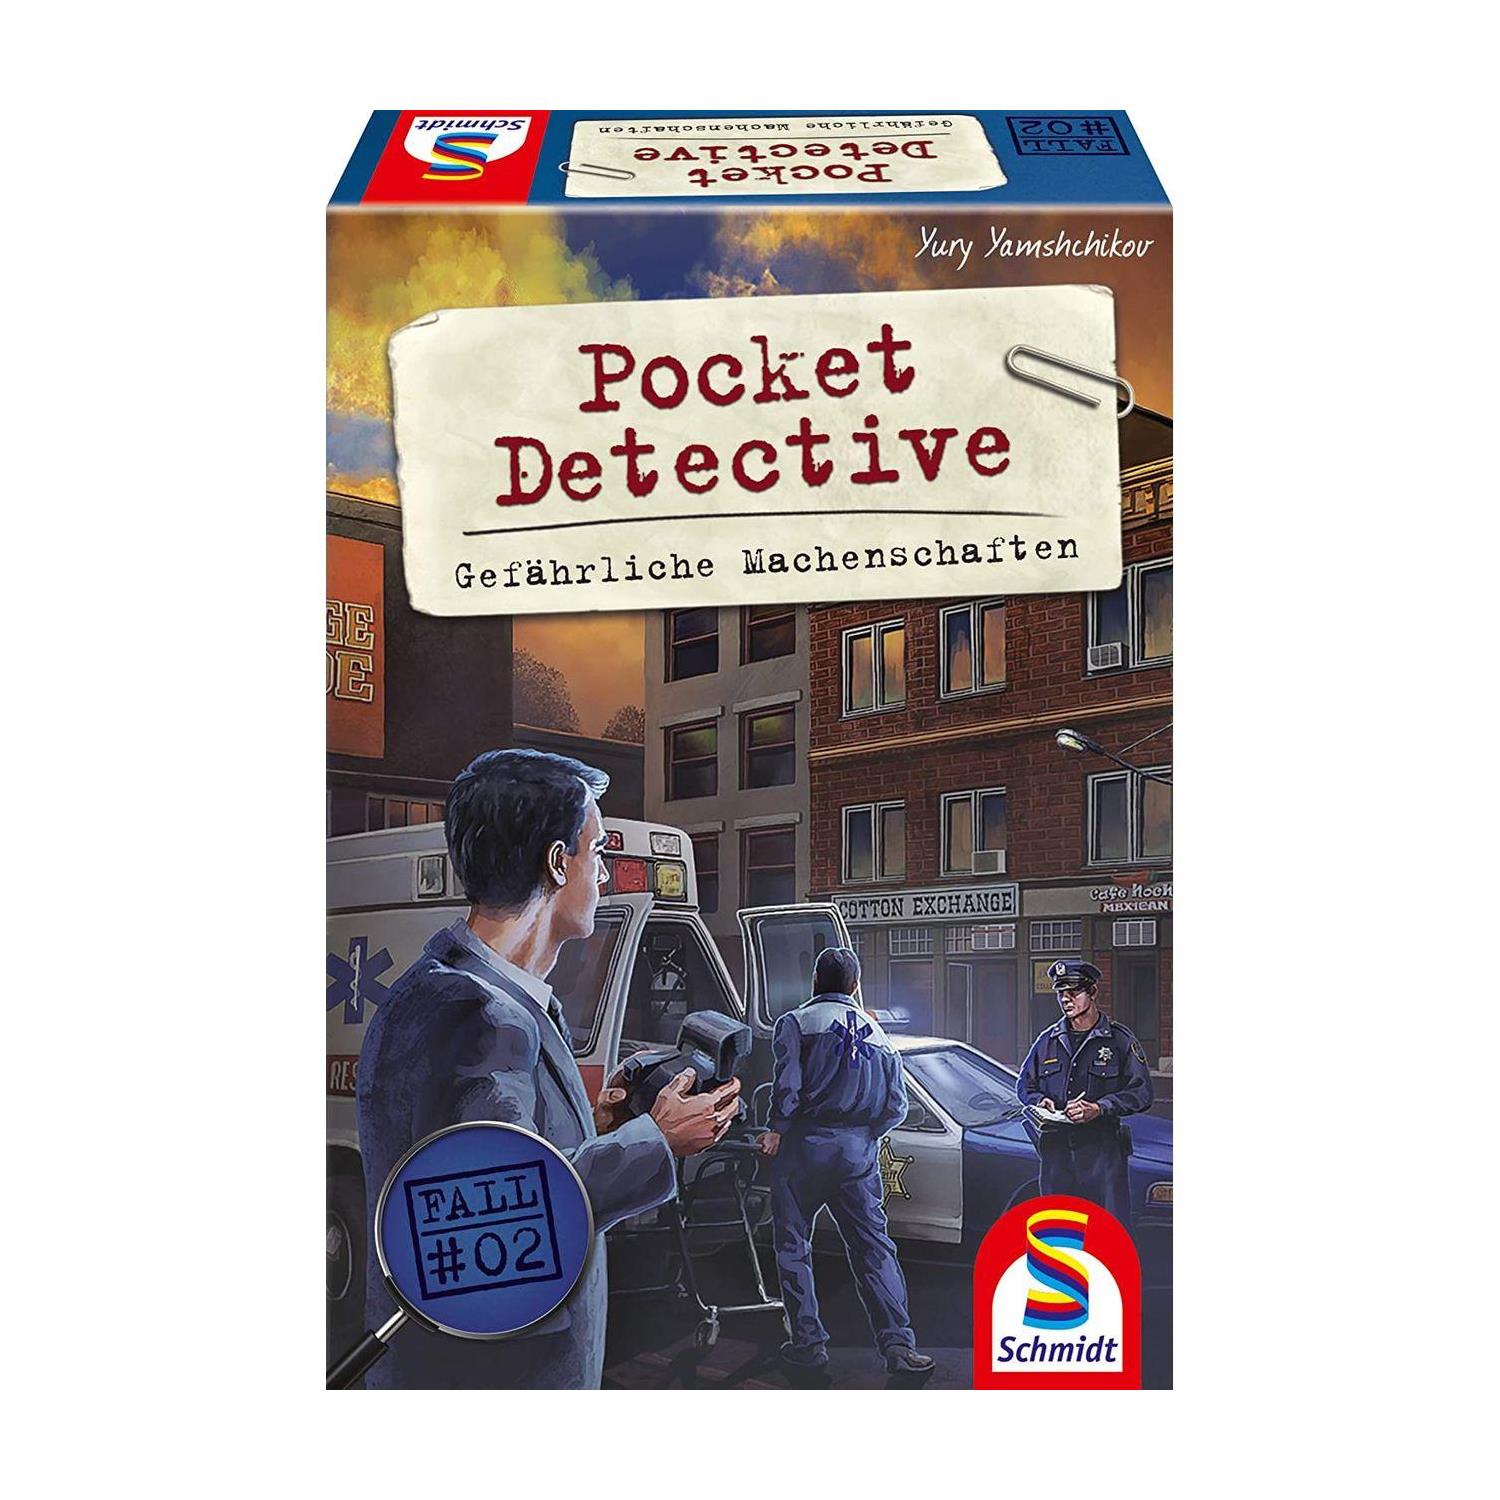 Pocket Detective Familienspiel Gefährliche Machenschaften SCHMIDT 49378